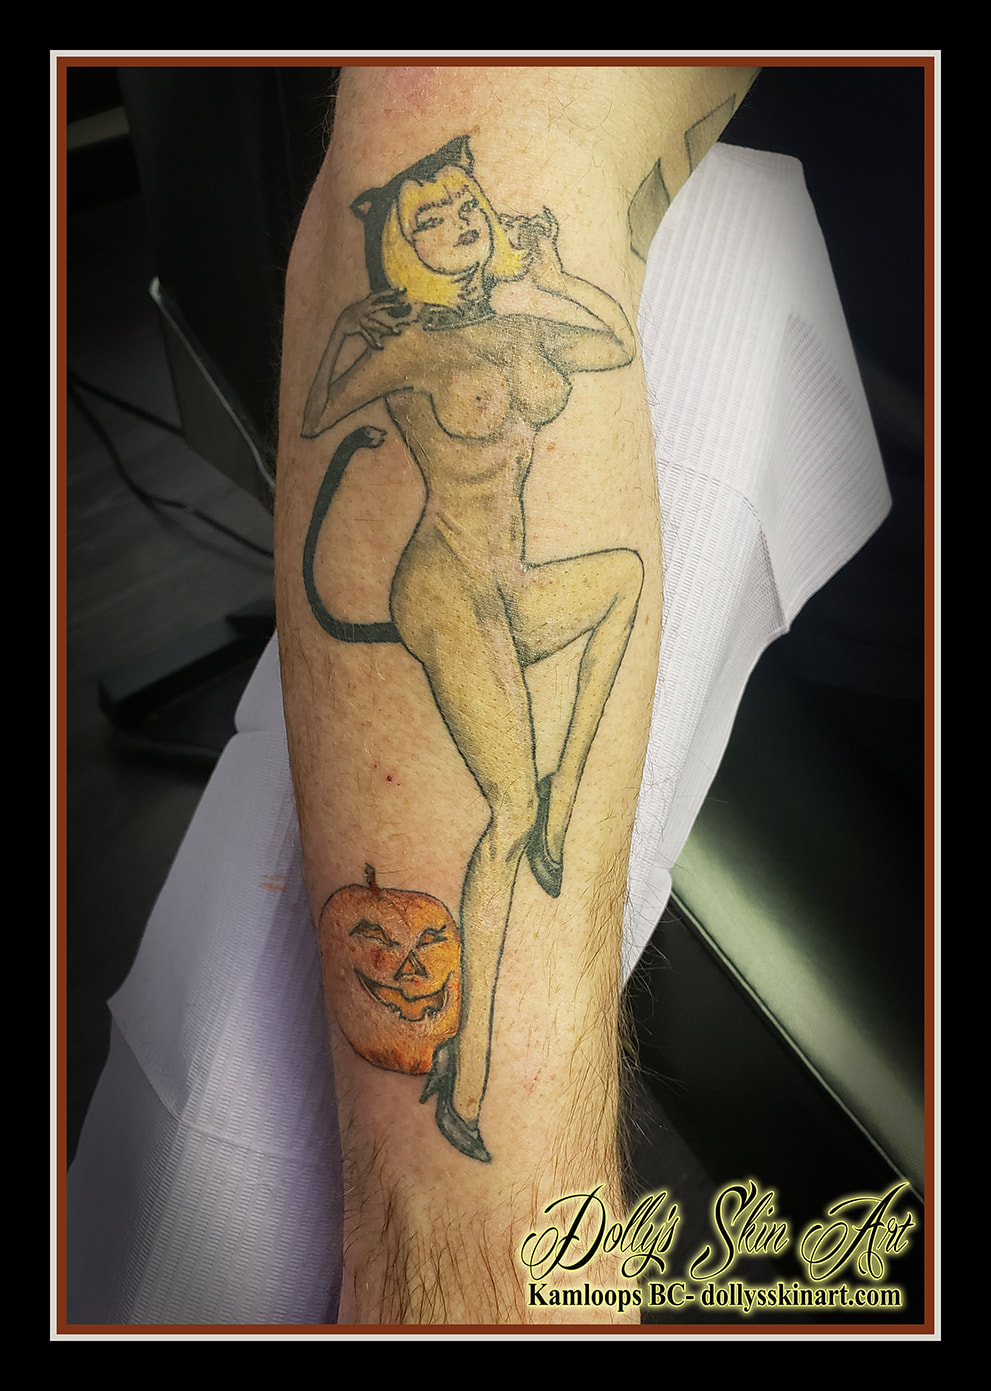 pin up girl tattoo drawing art movie platoon background set Alberto Vargas Halloween Cat Vintage tattoo dolly's skin art kamloops